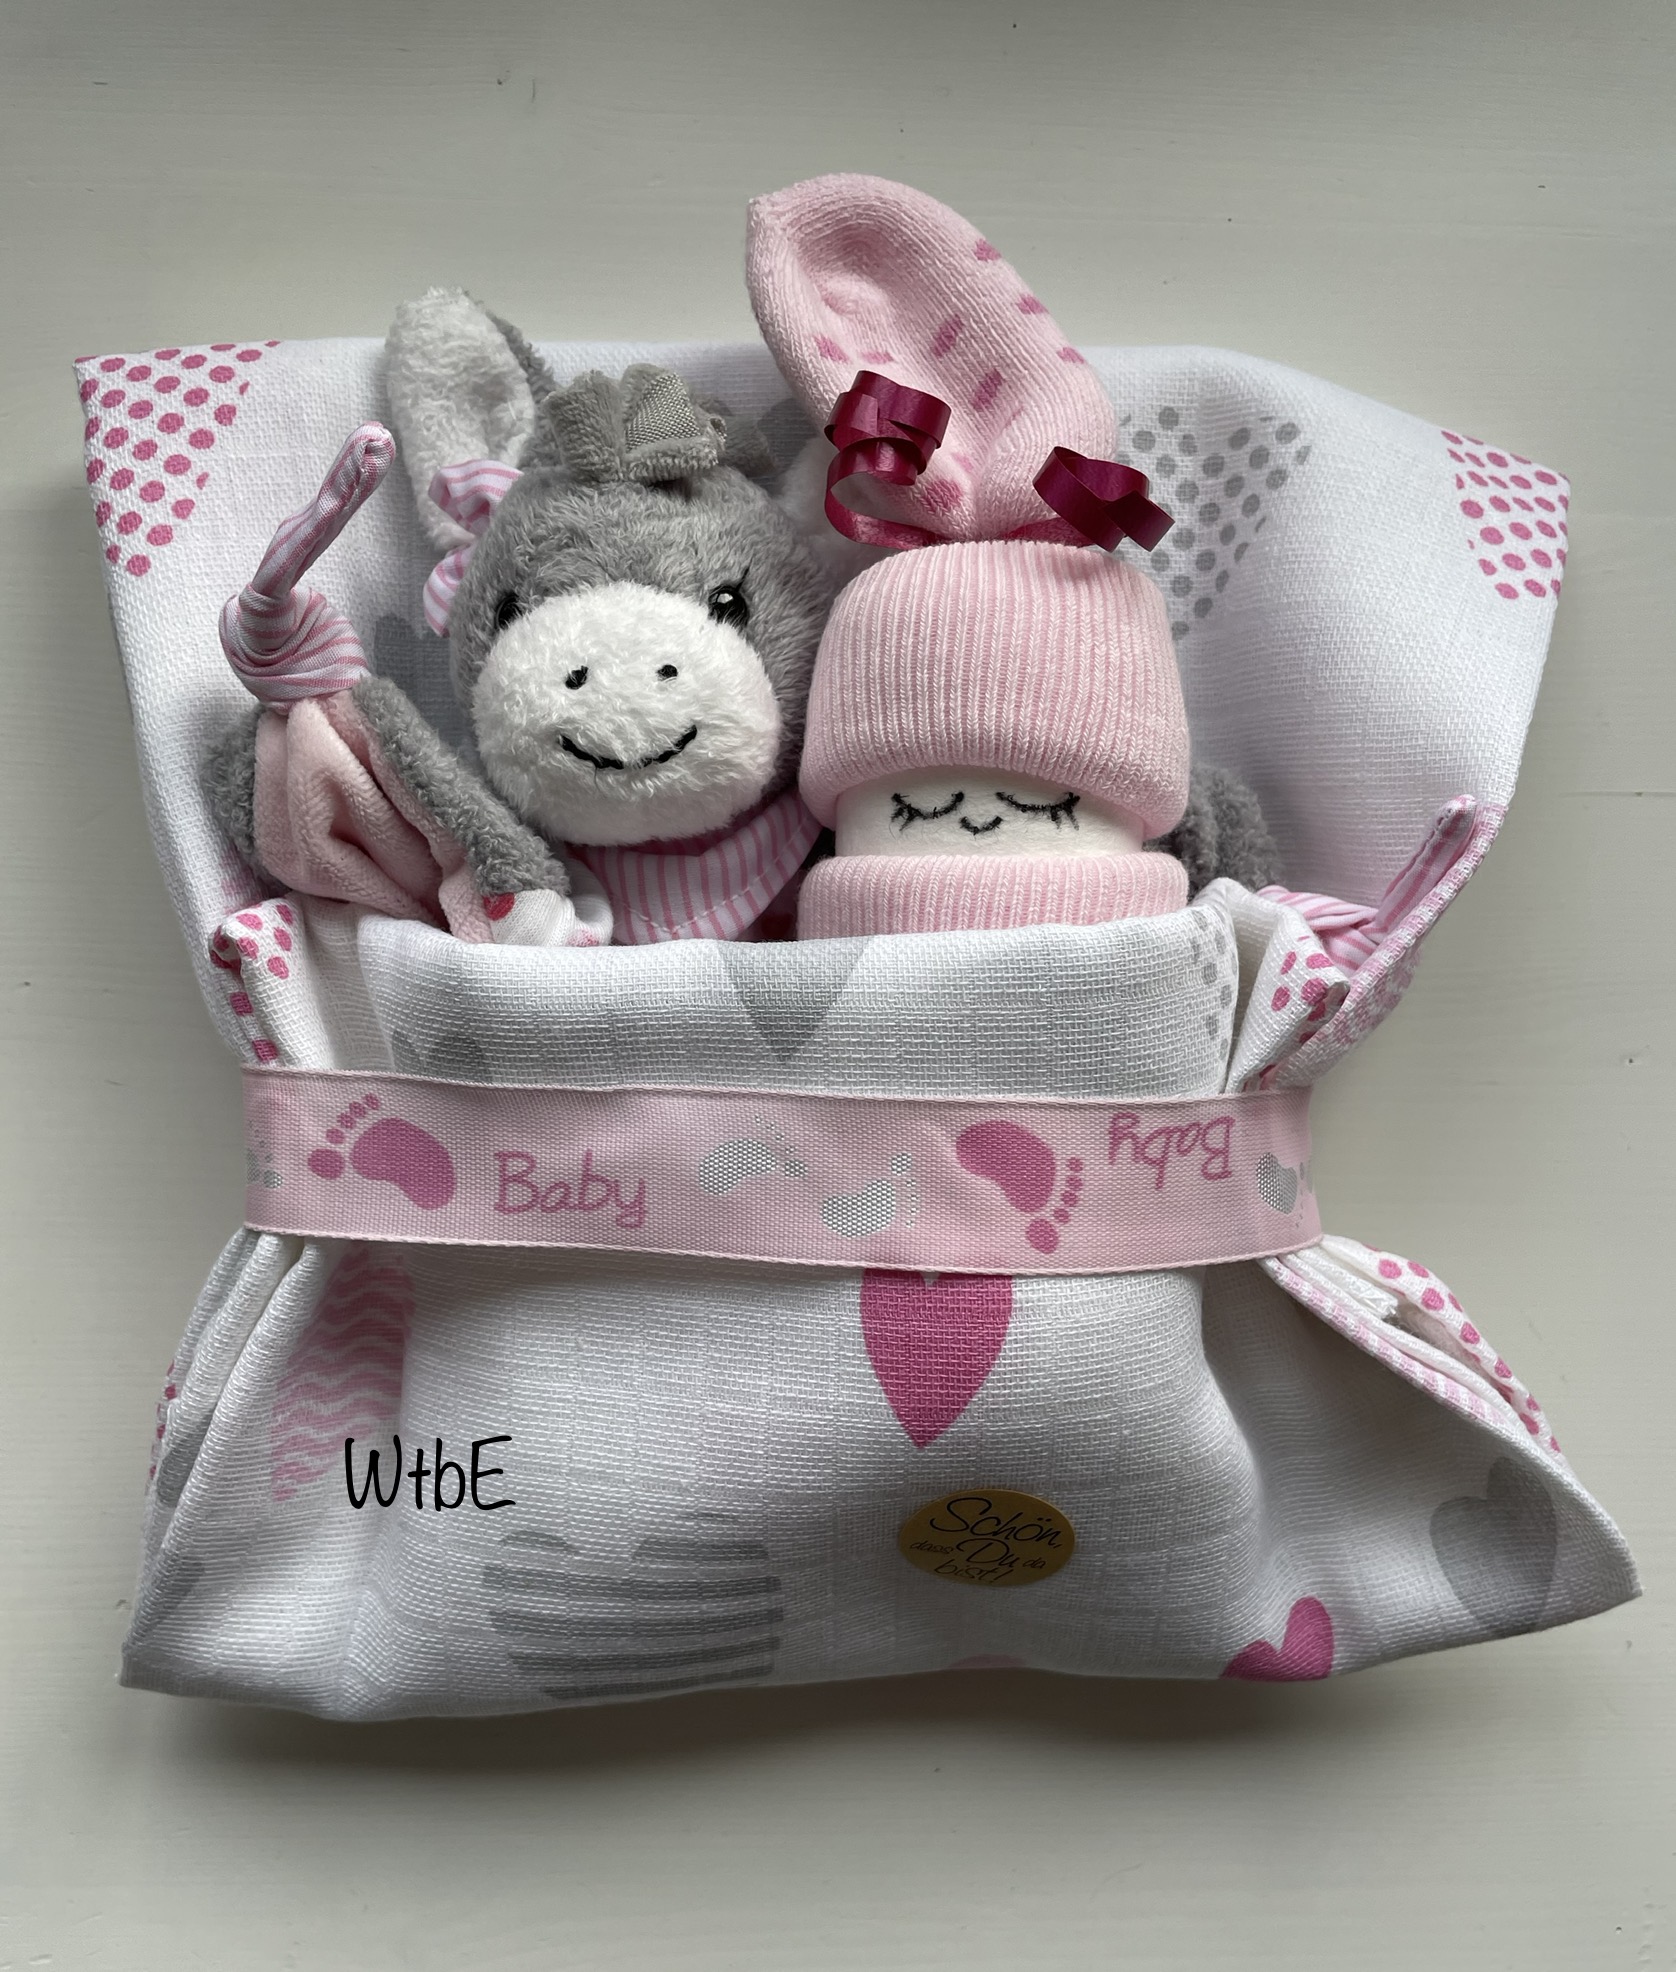 10'' Reborn Baby Dolls Lifelike Newborn Full Vinyl Silicone Realistic Baby  Gifts | eBay